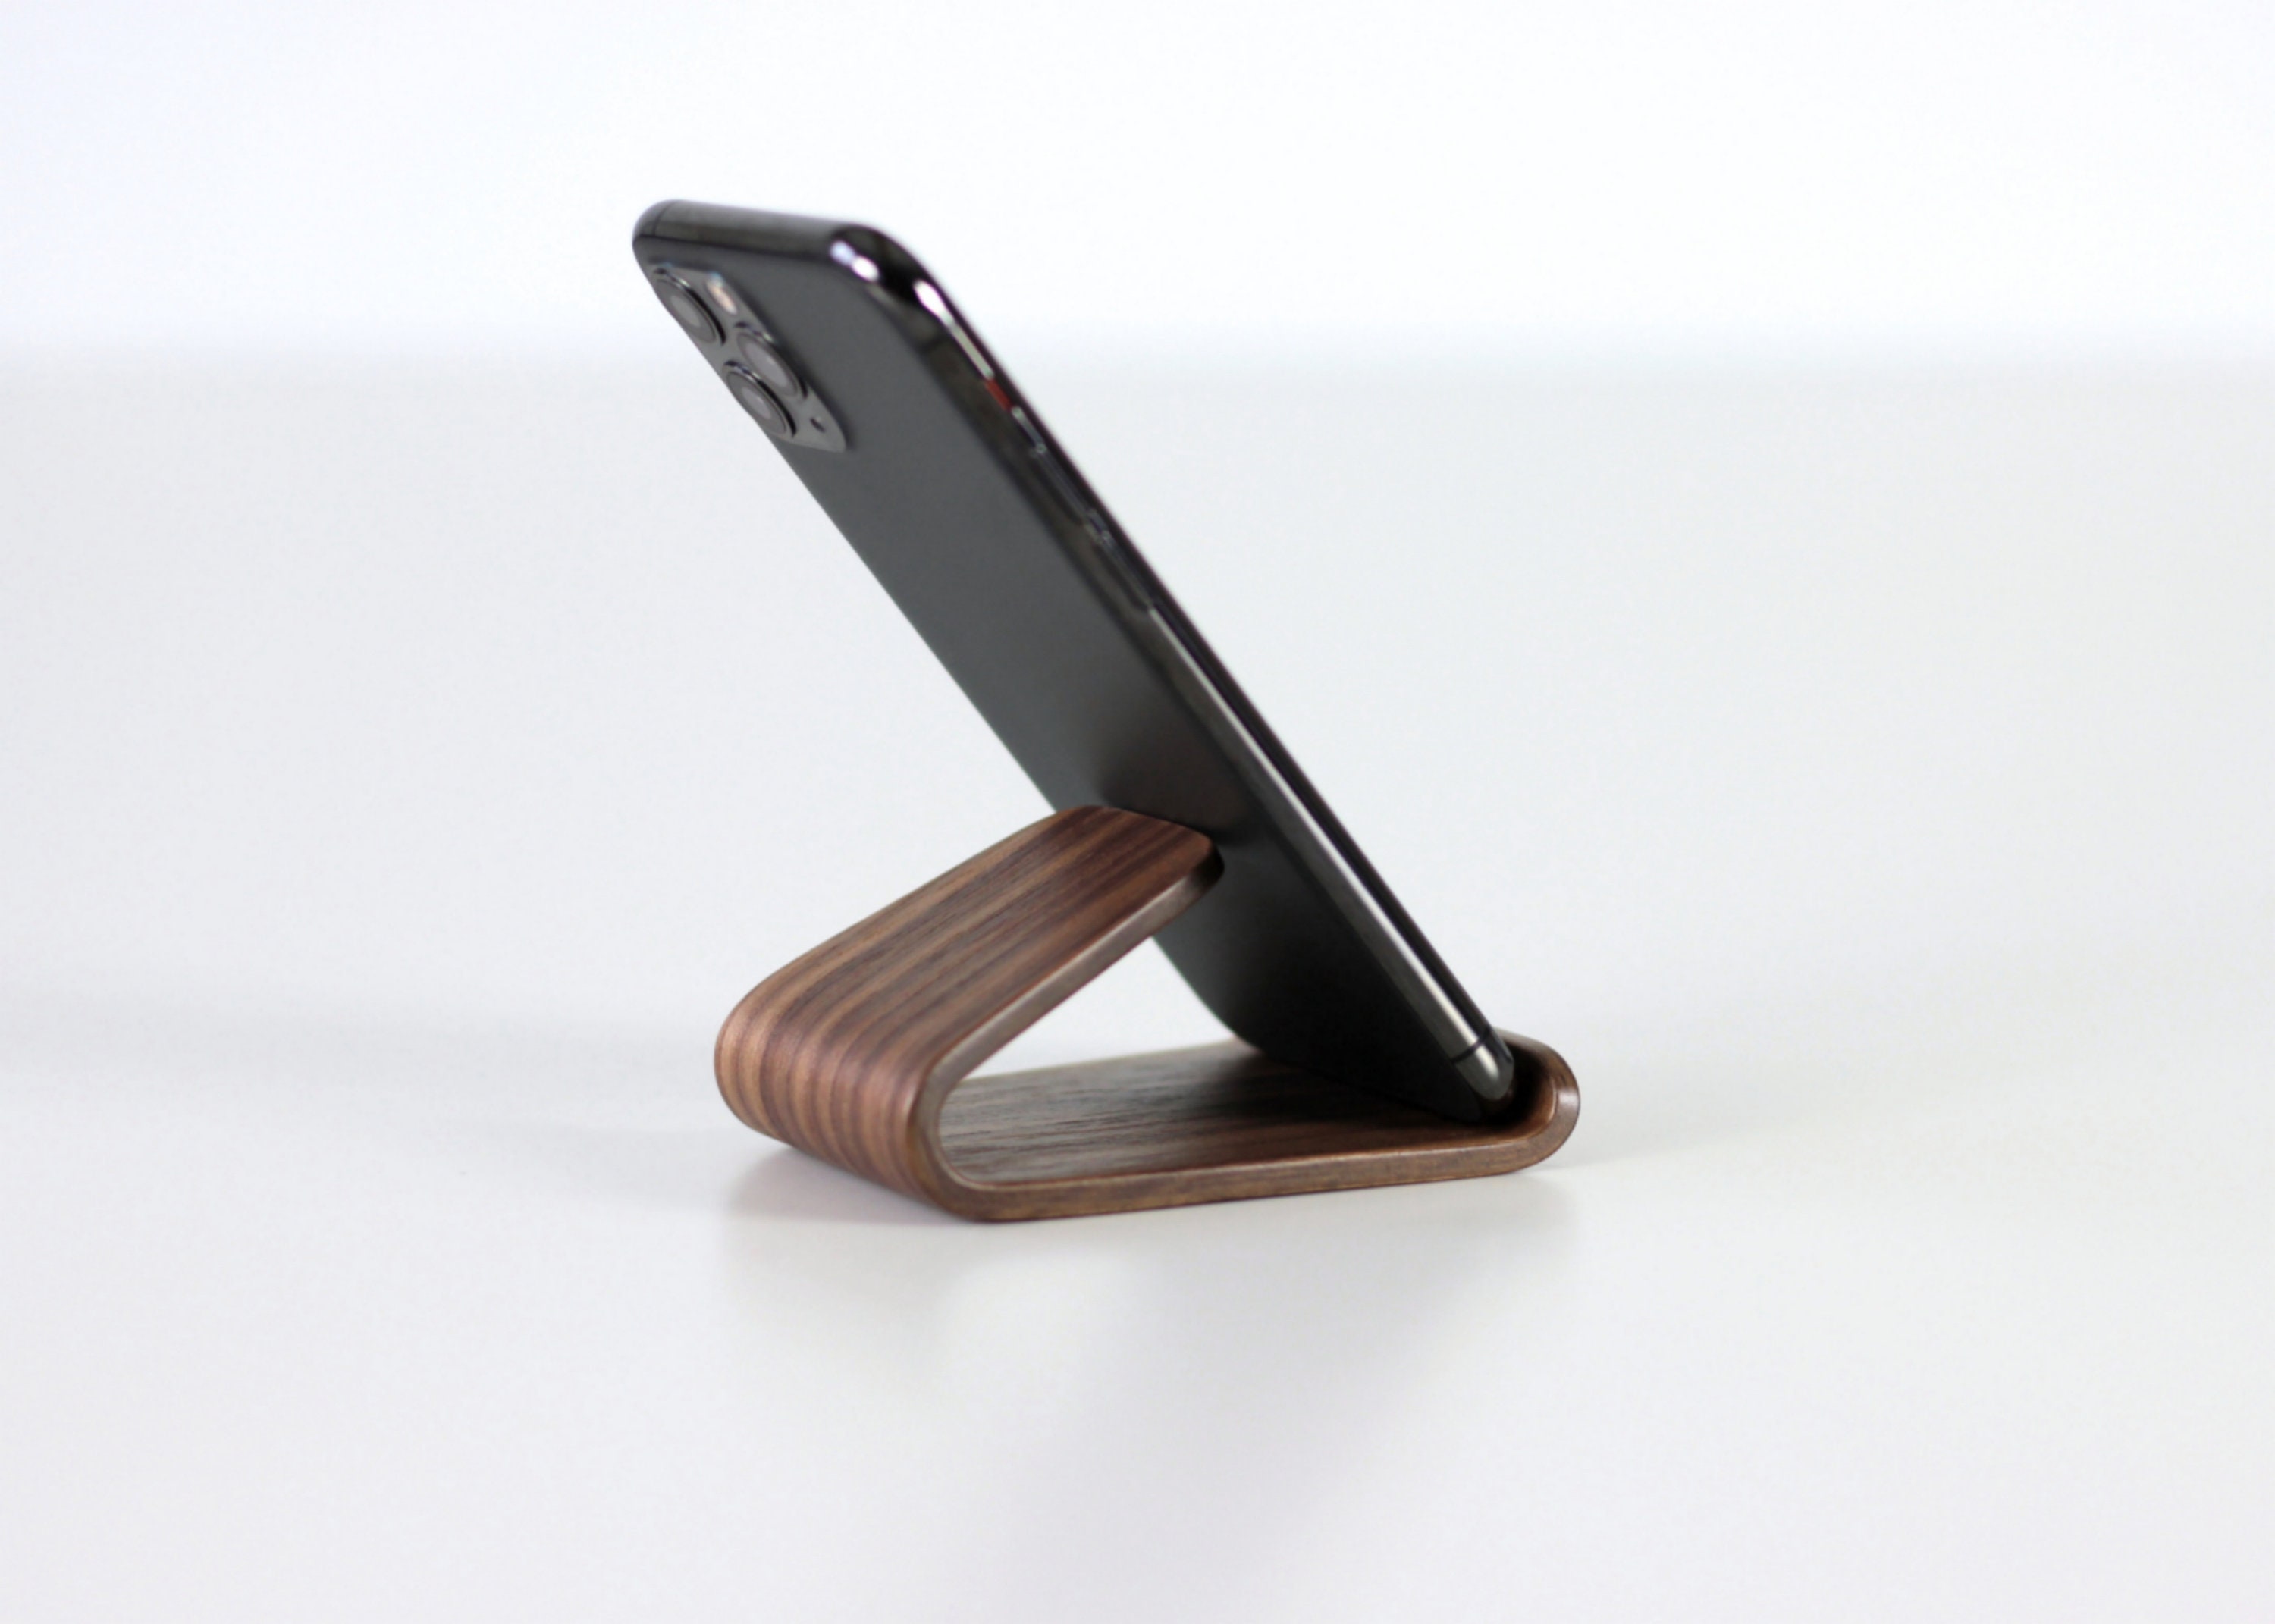 Wooden Smartphone Cell Phone Holder Cute Desktop Stand Holder